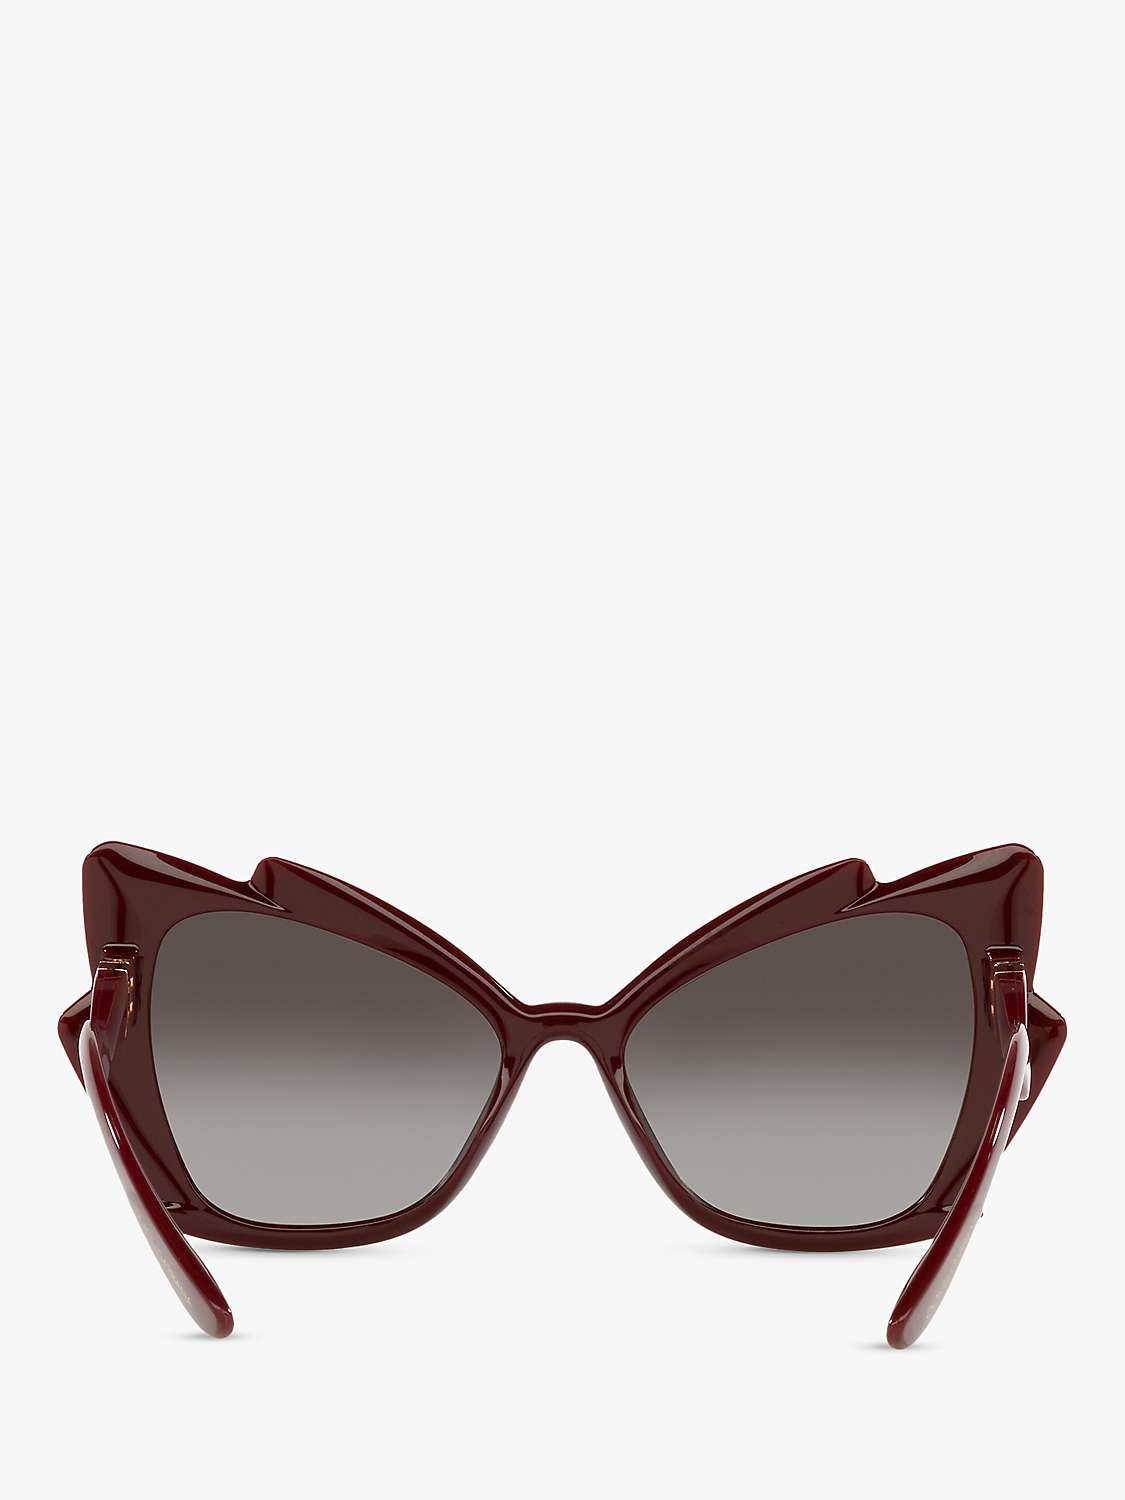 Buy Dolce & Gabbana DG616632 Women's Cat's Eye Sunglasses, Bordeaux Online at johnlewis.com